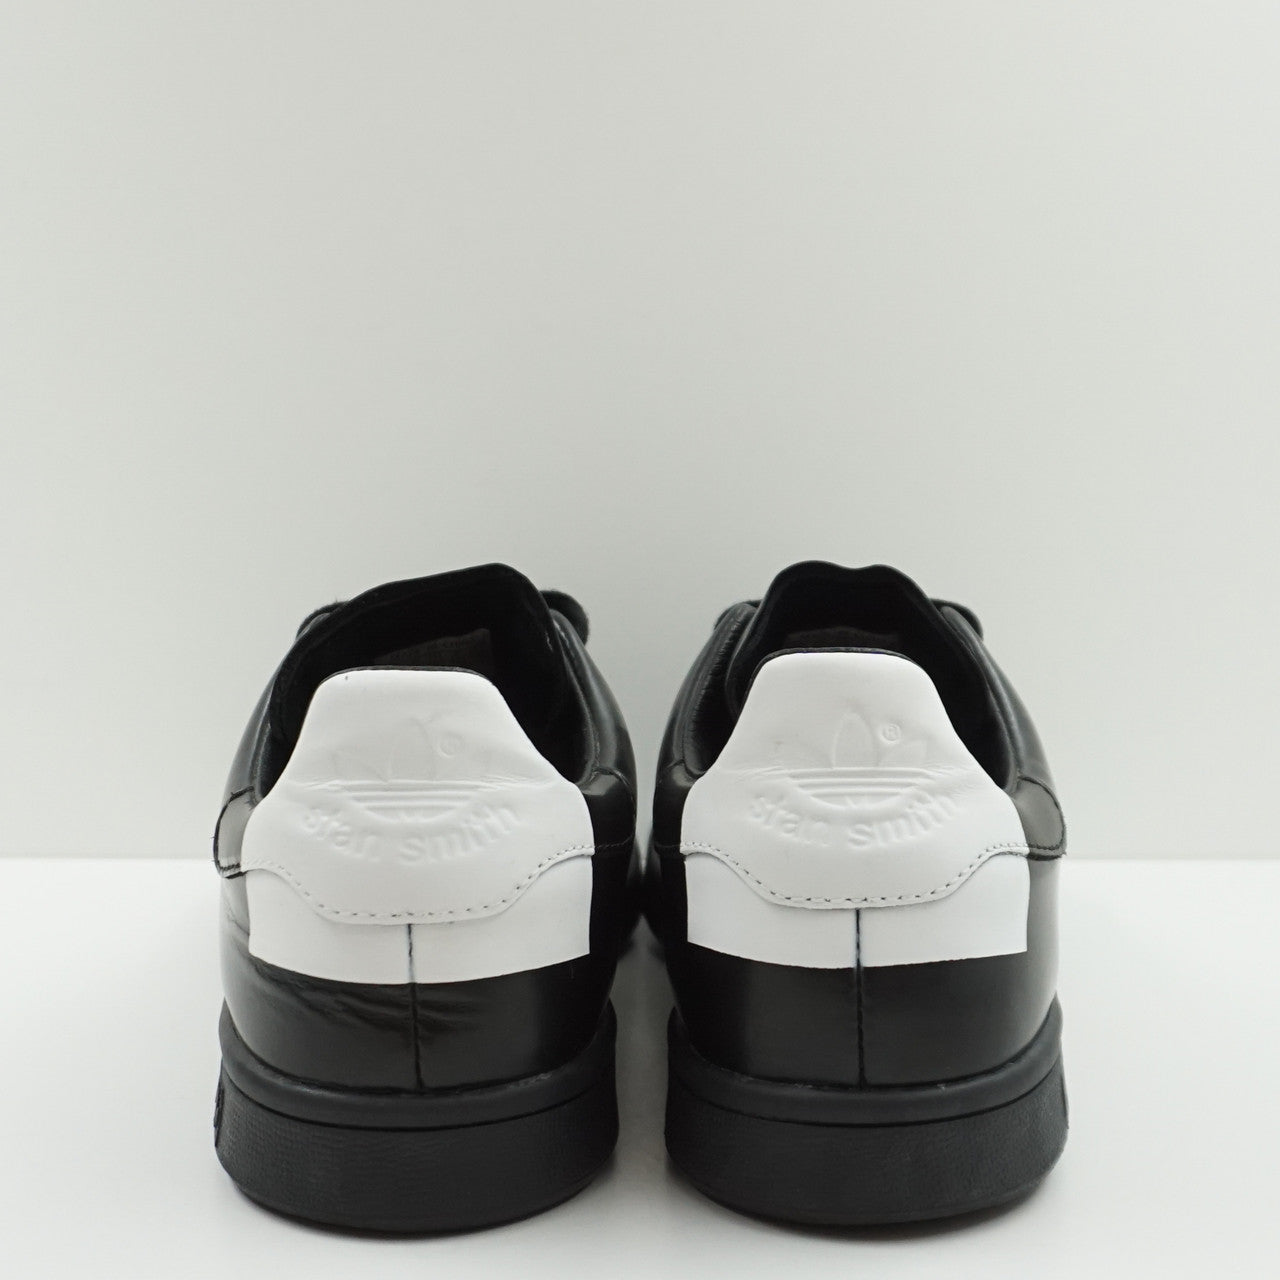 Adidas Stan Smith Recon Core Black